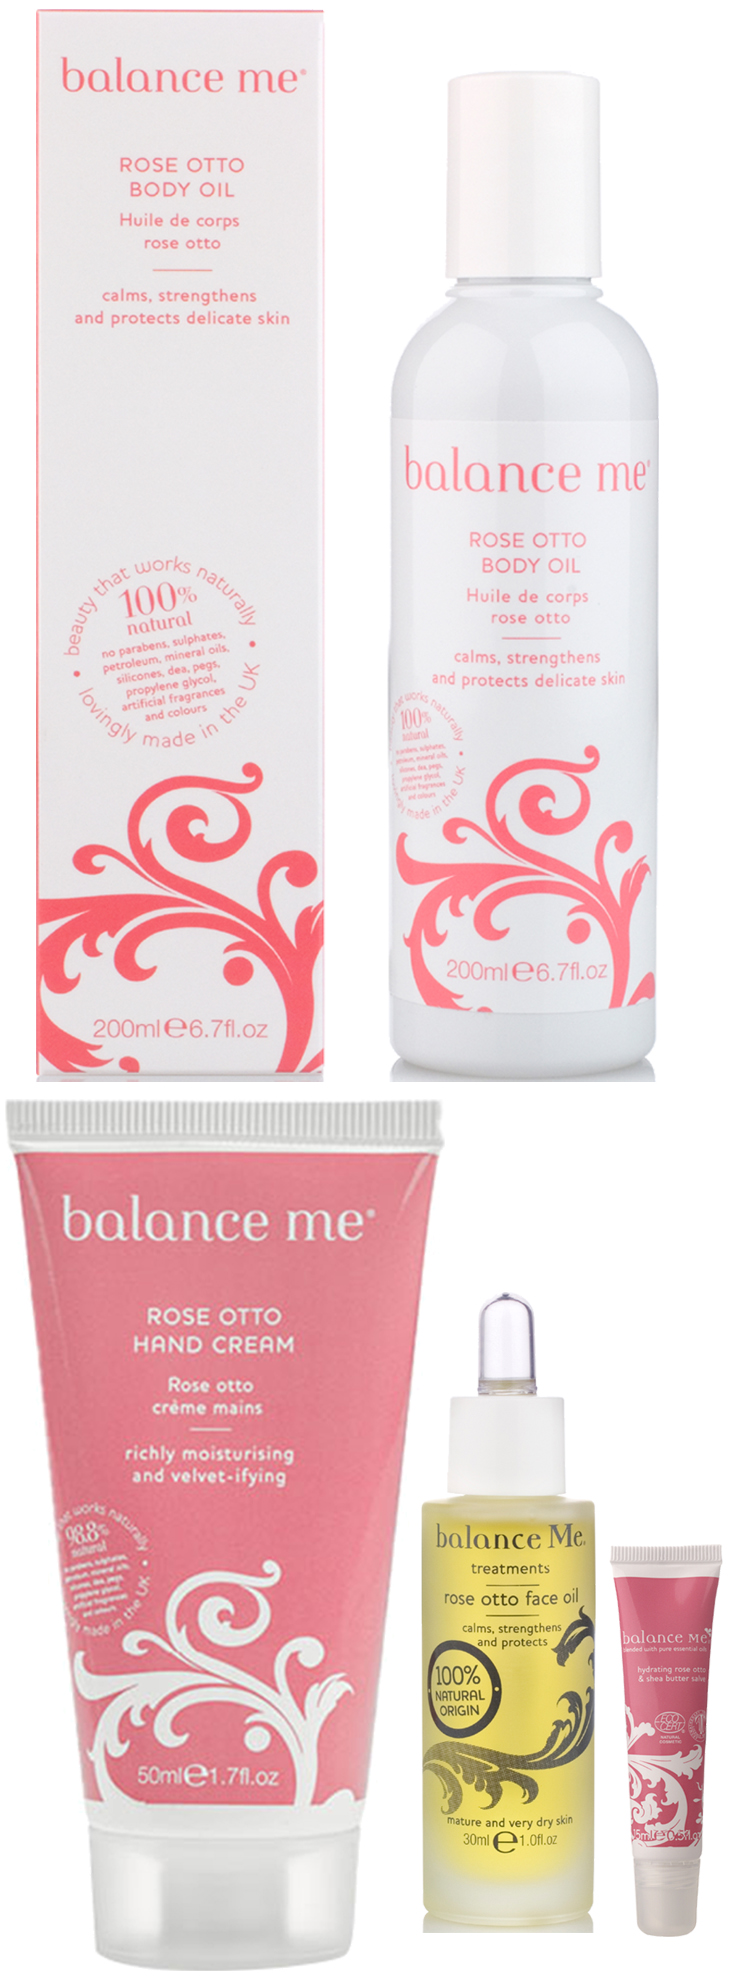 BeautyBlog-balance-me-rose-otto-vind